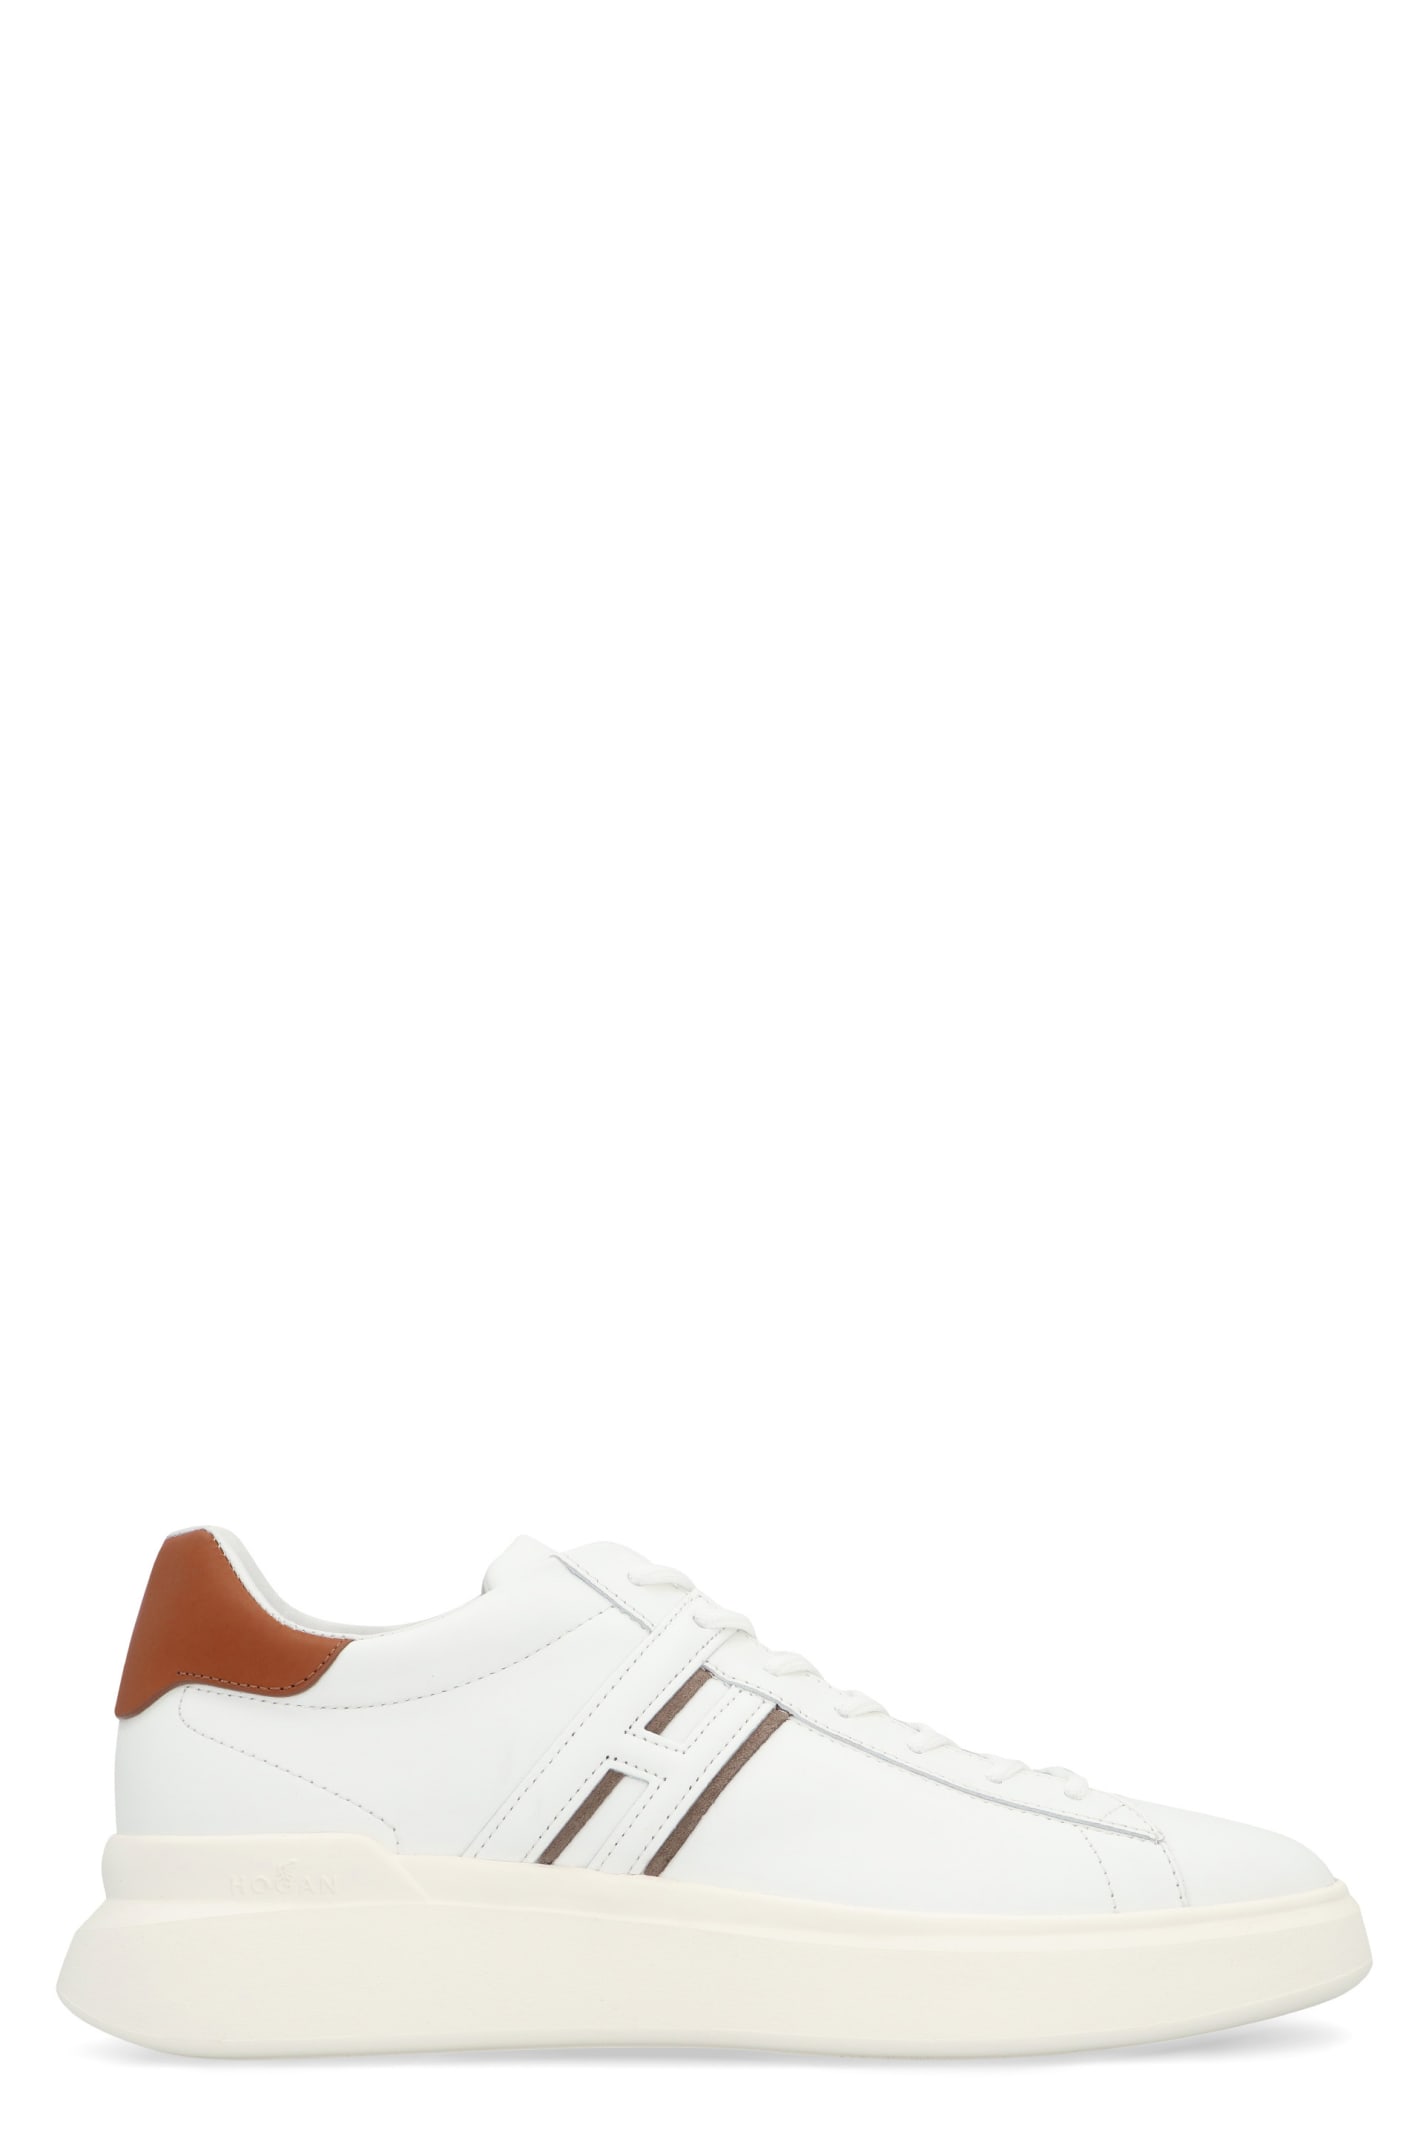 Hogan H580 Low-top Sneakers In White